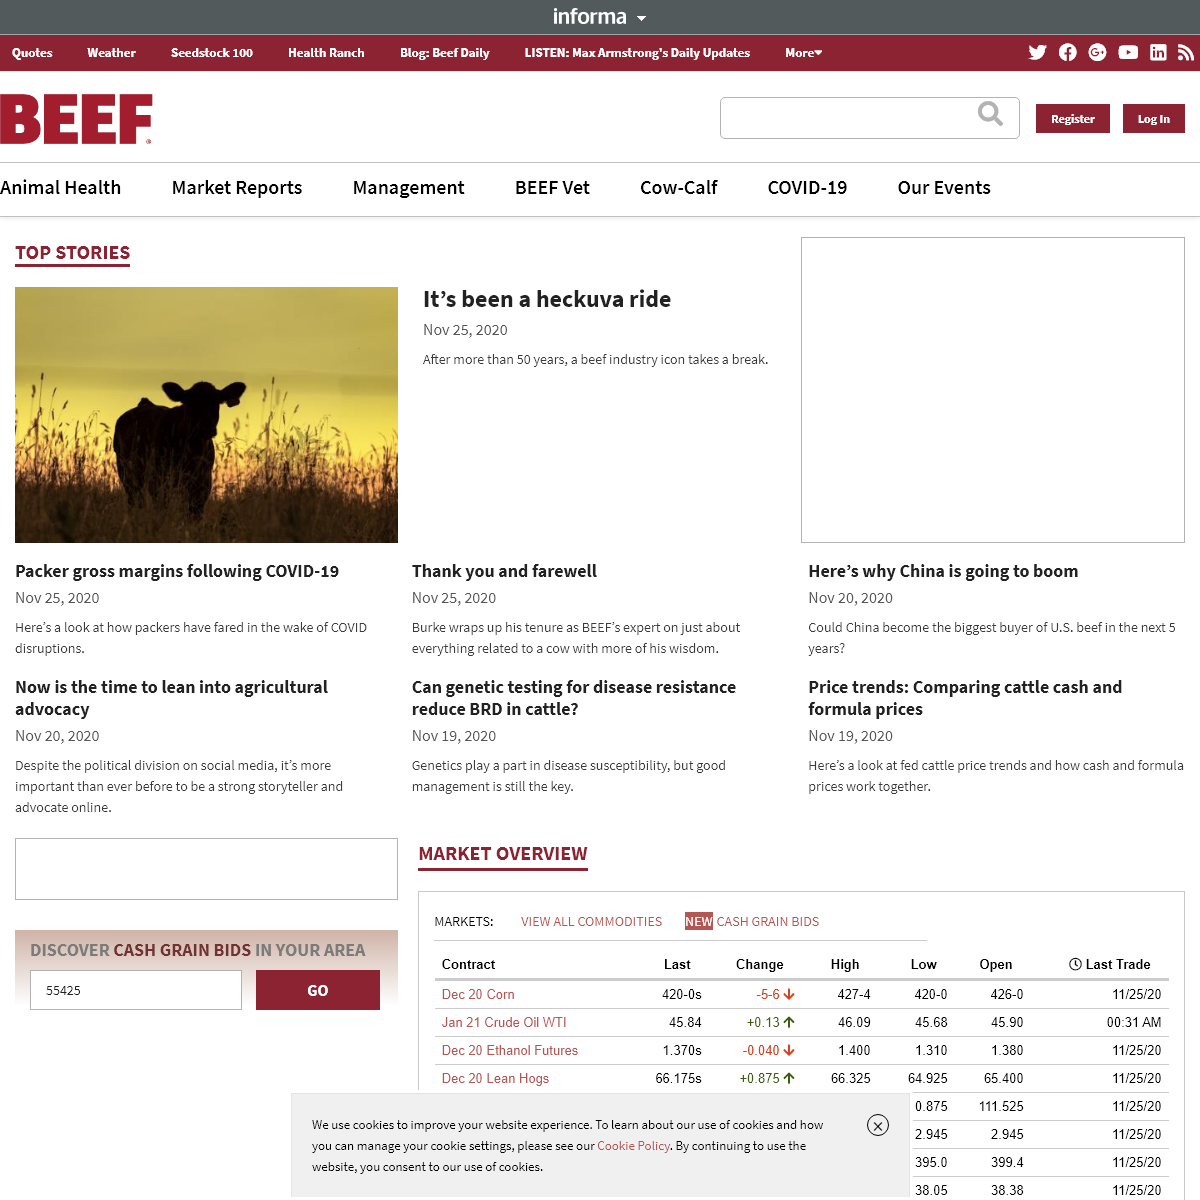 A complete backup of beefmagazine.com